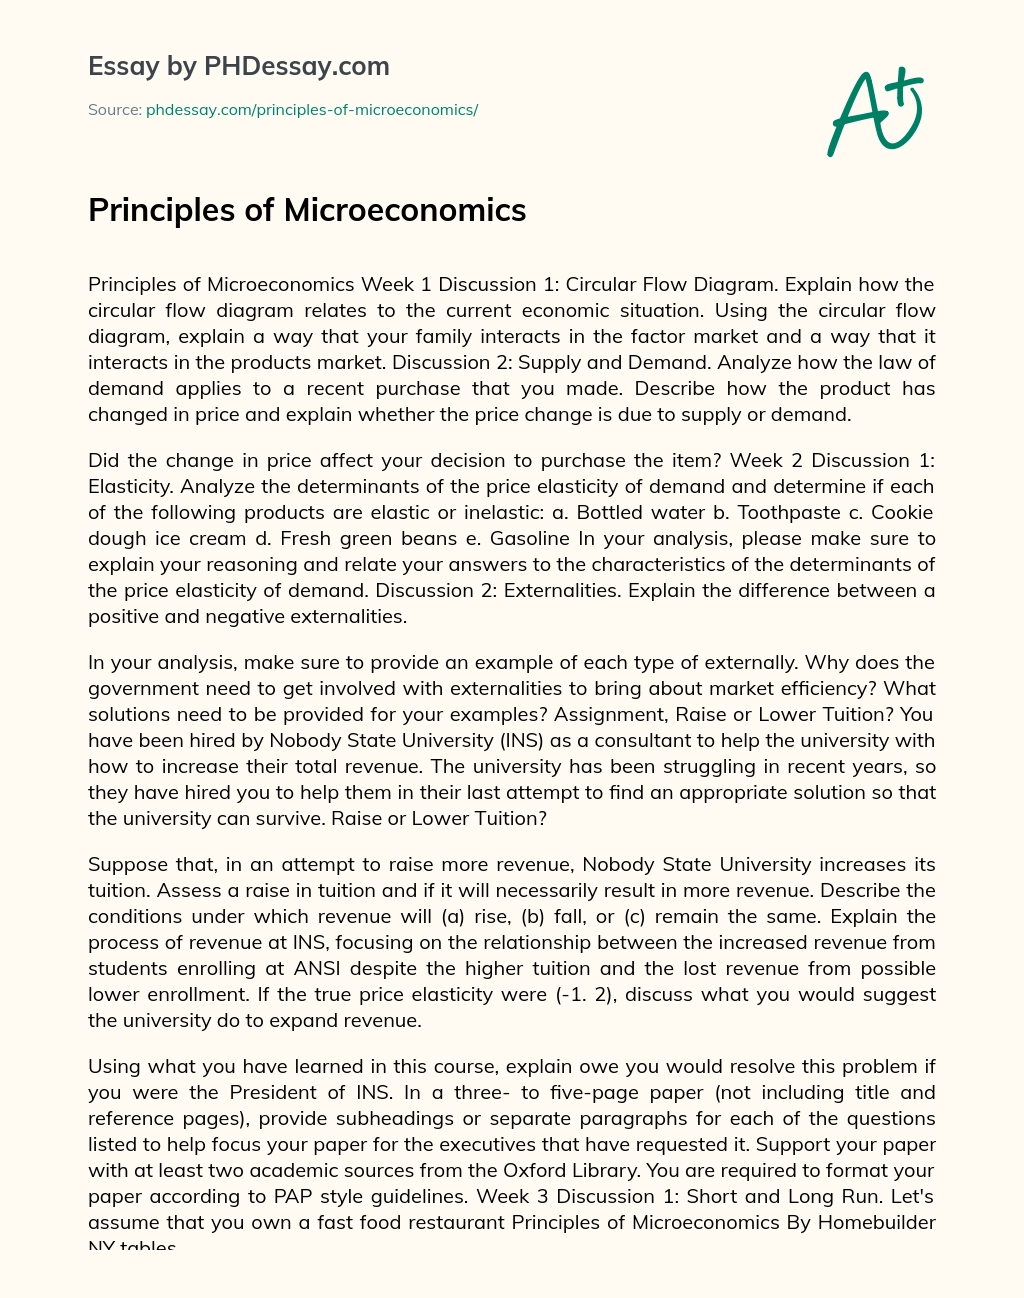 Principles of Microeconomics essay